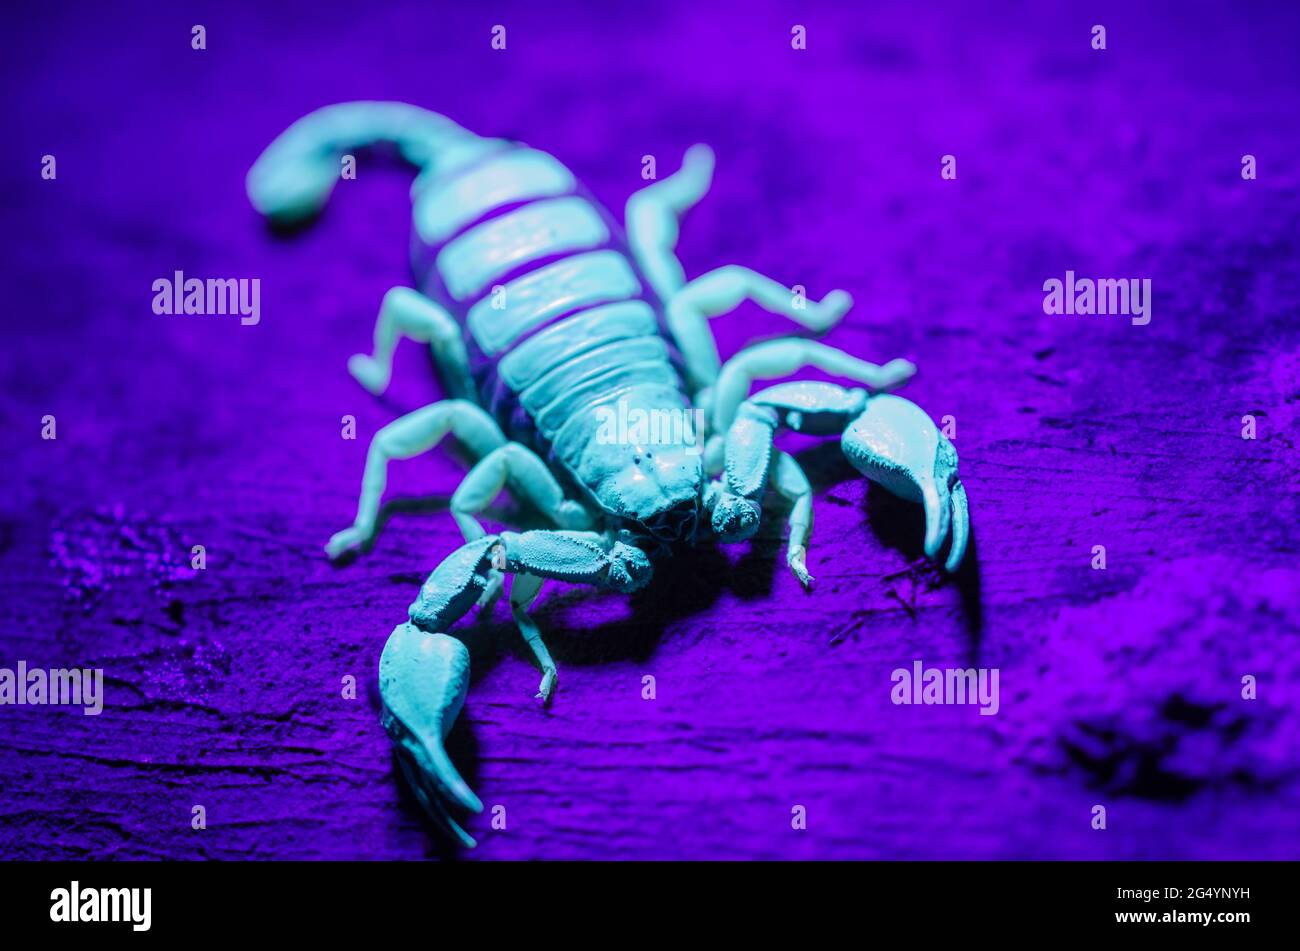 Black scorpion close-up with uv light Stock Photo